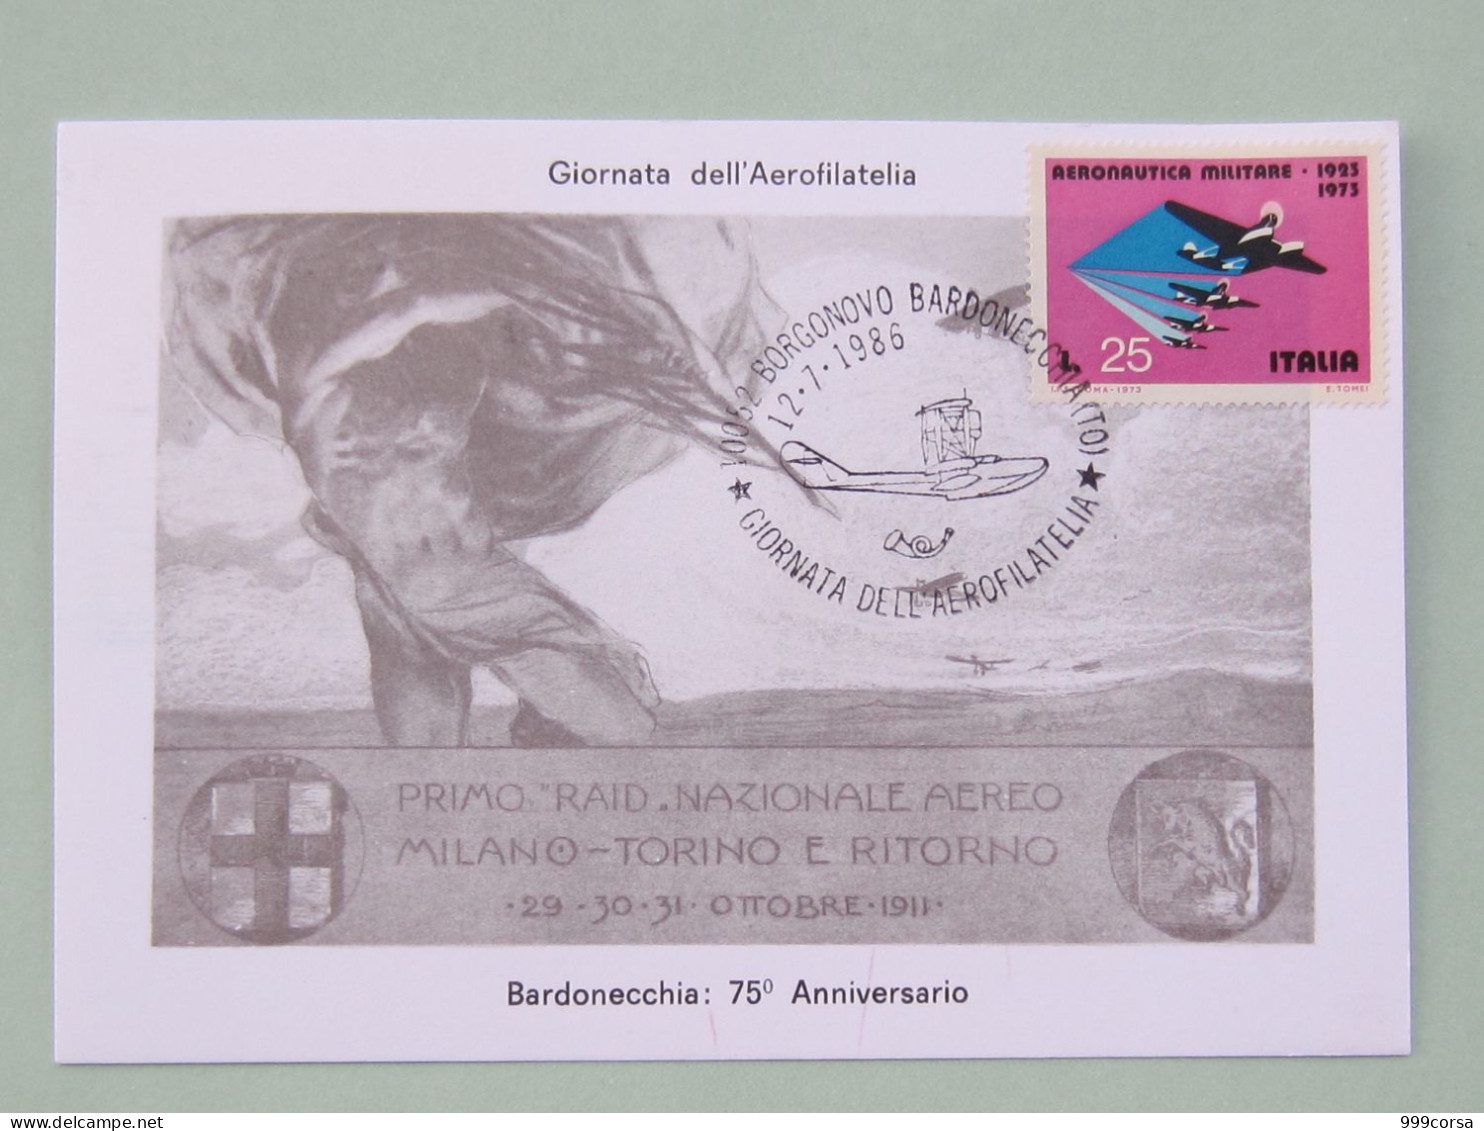 Italia, Trasporti Aerei, Aereo Macchi M-71, Ann. Spec. 12-7-1986, Giornata Aerofilatelia,Borgonovo Bardonecchia (A)2scan - Autres (Air)